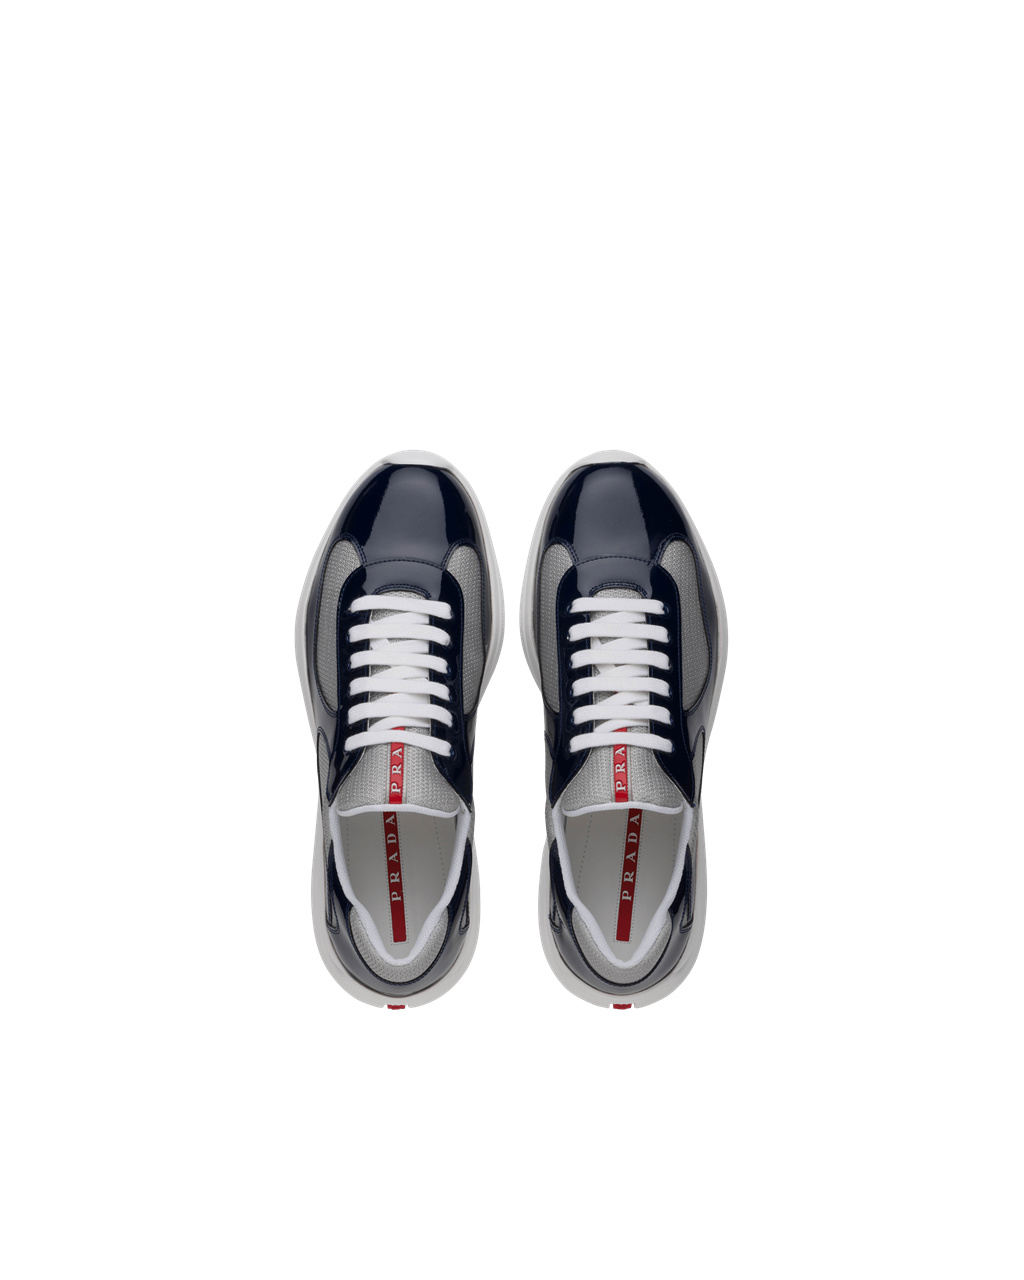 Prada Sneakers Clearance Online - Prada America's Cup Sneakers Mens ...